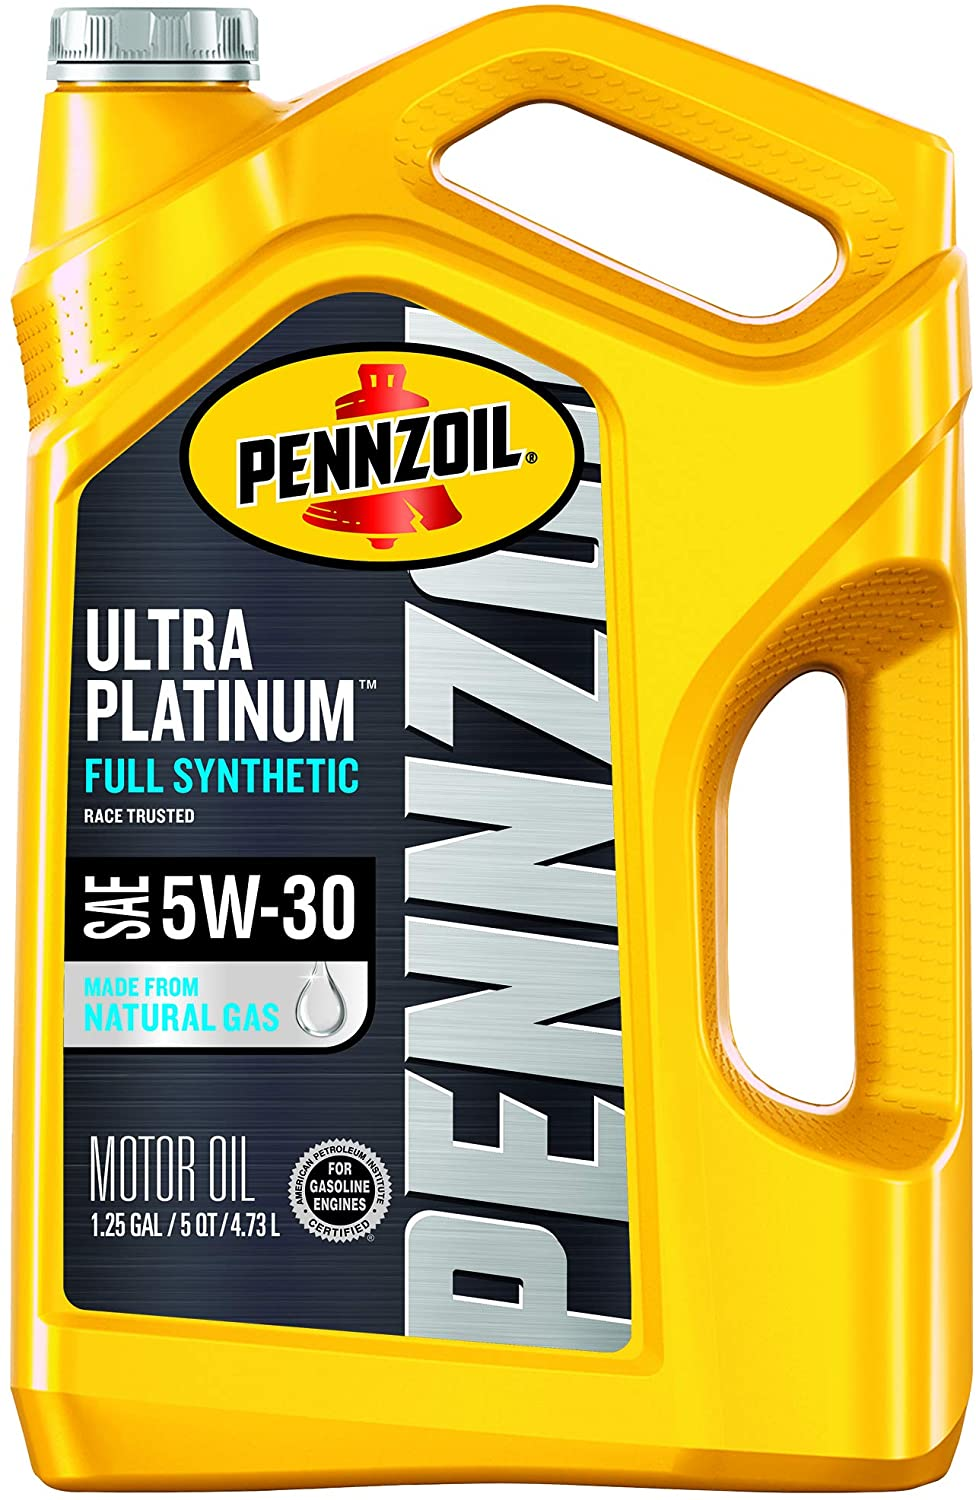 Amazon.com: Pennzoil Ultra Platinum Full Synthetic 5W-30 Motor Oil (5-Quart, Single Pack): Automotive $24.97